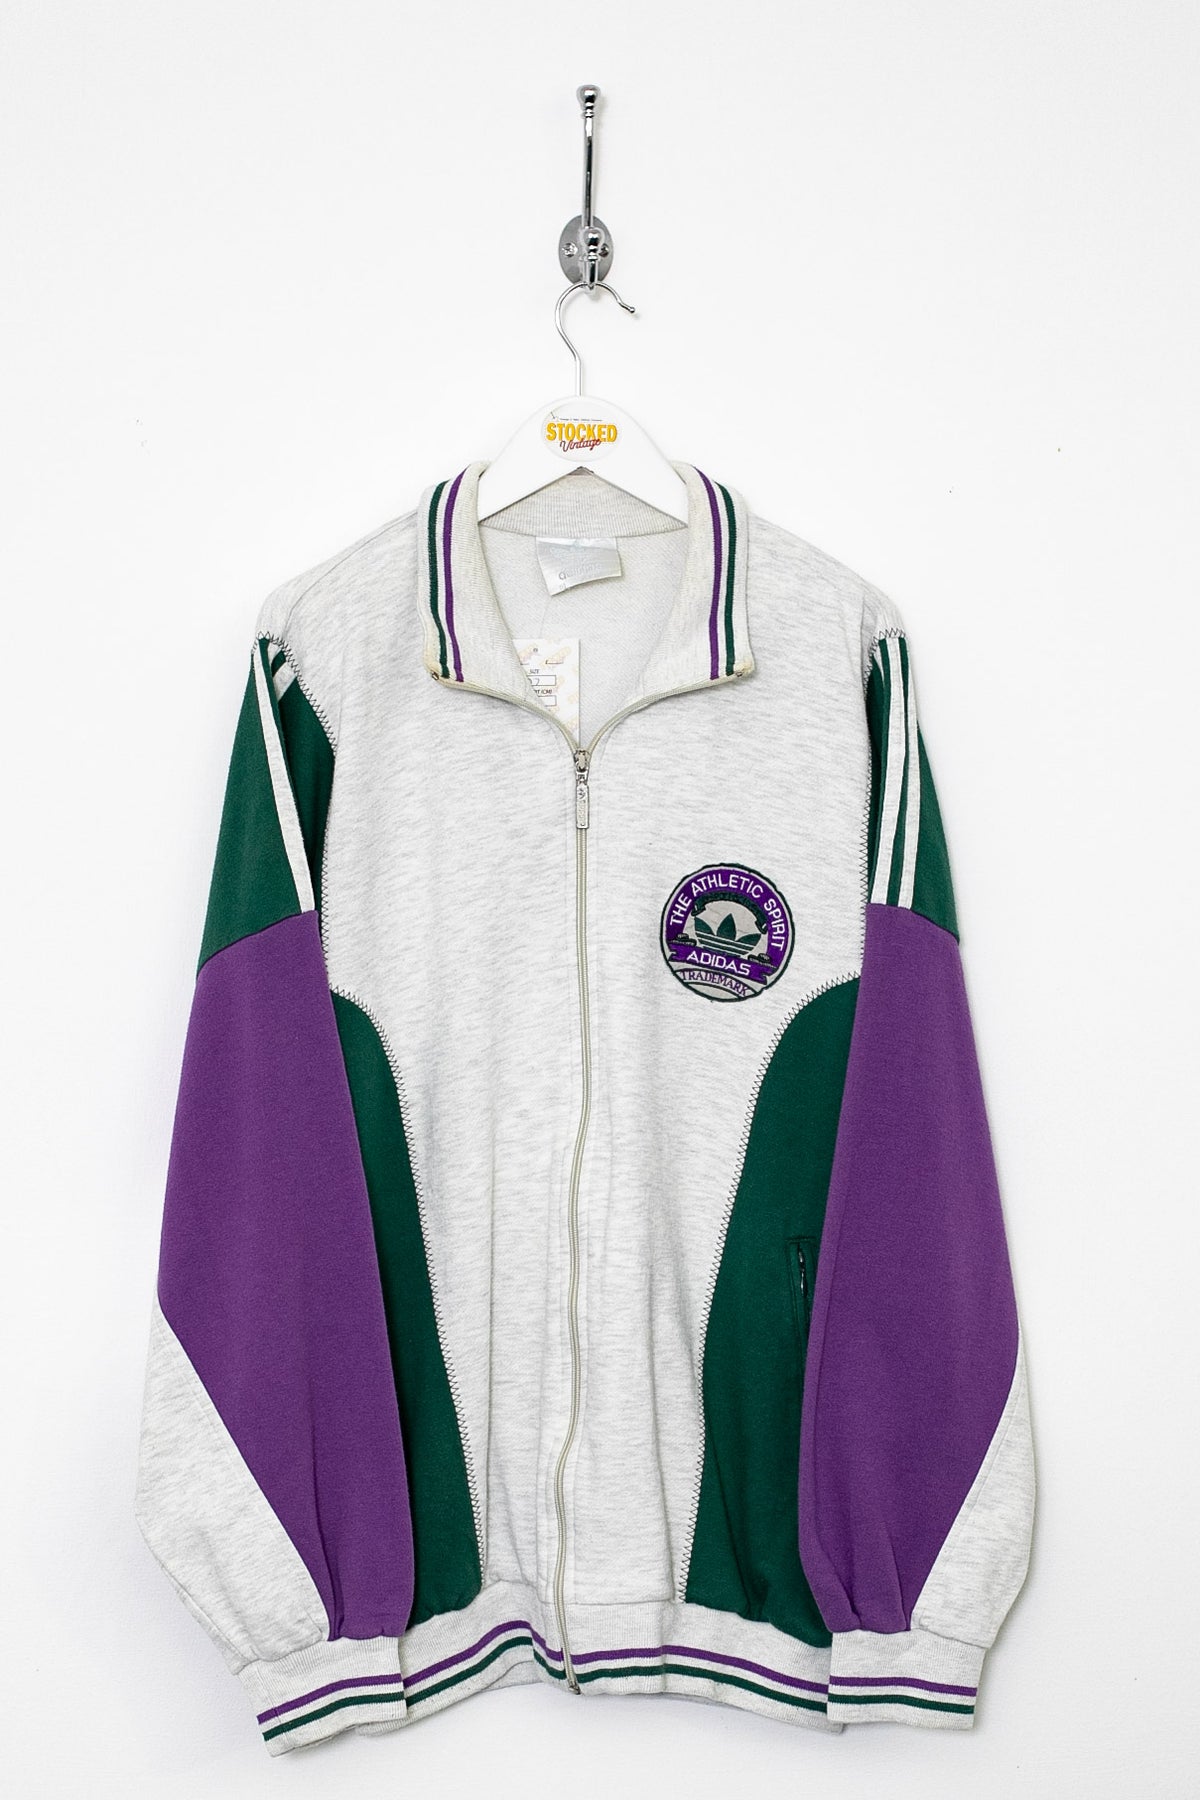 90s Adidas Zipped Sweatshirt (L)